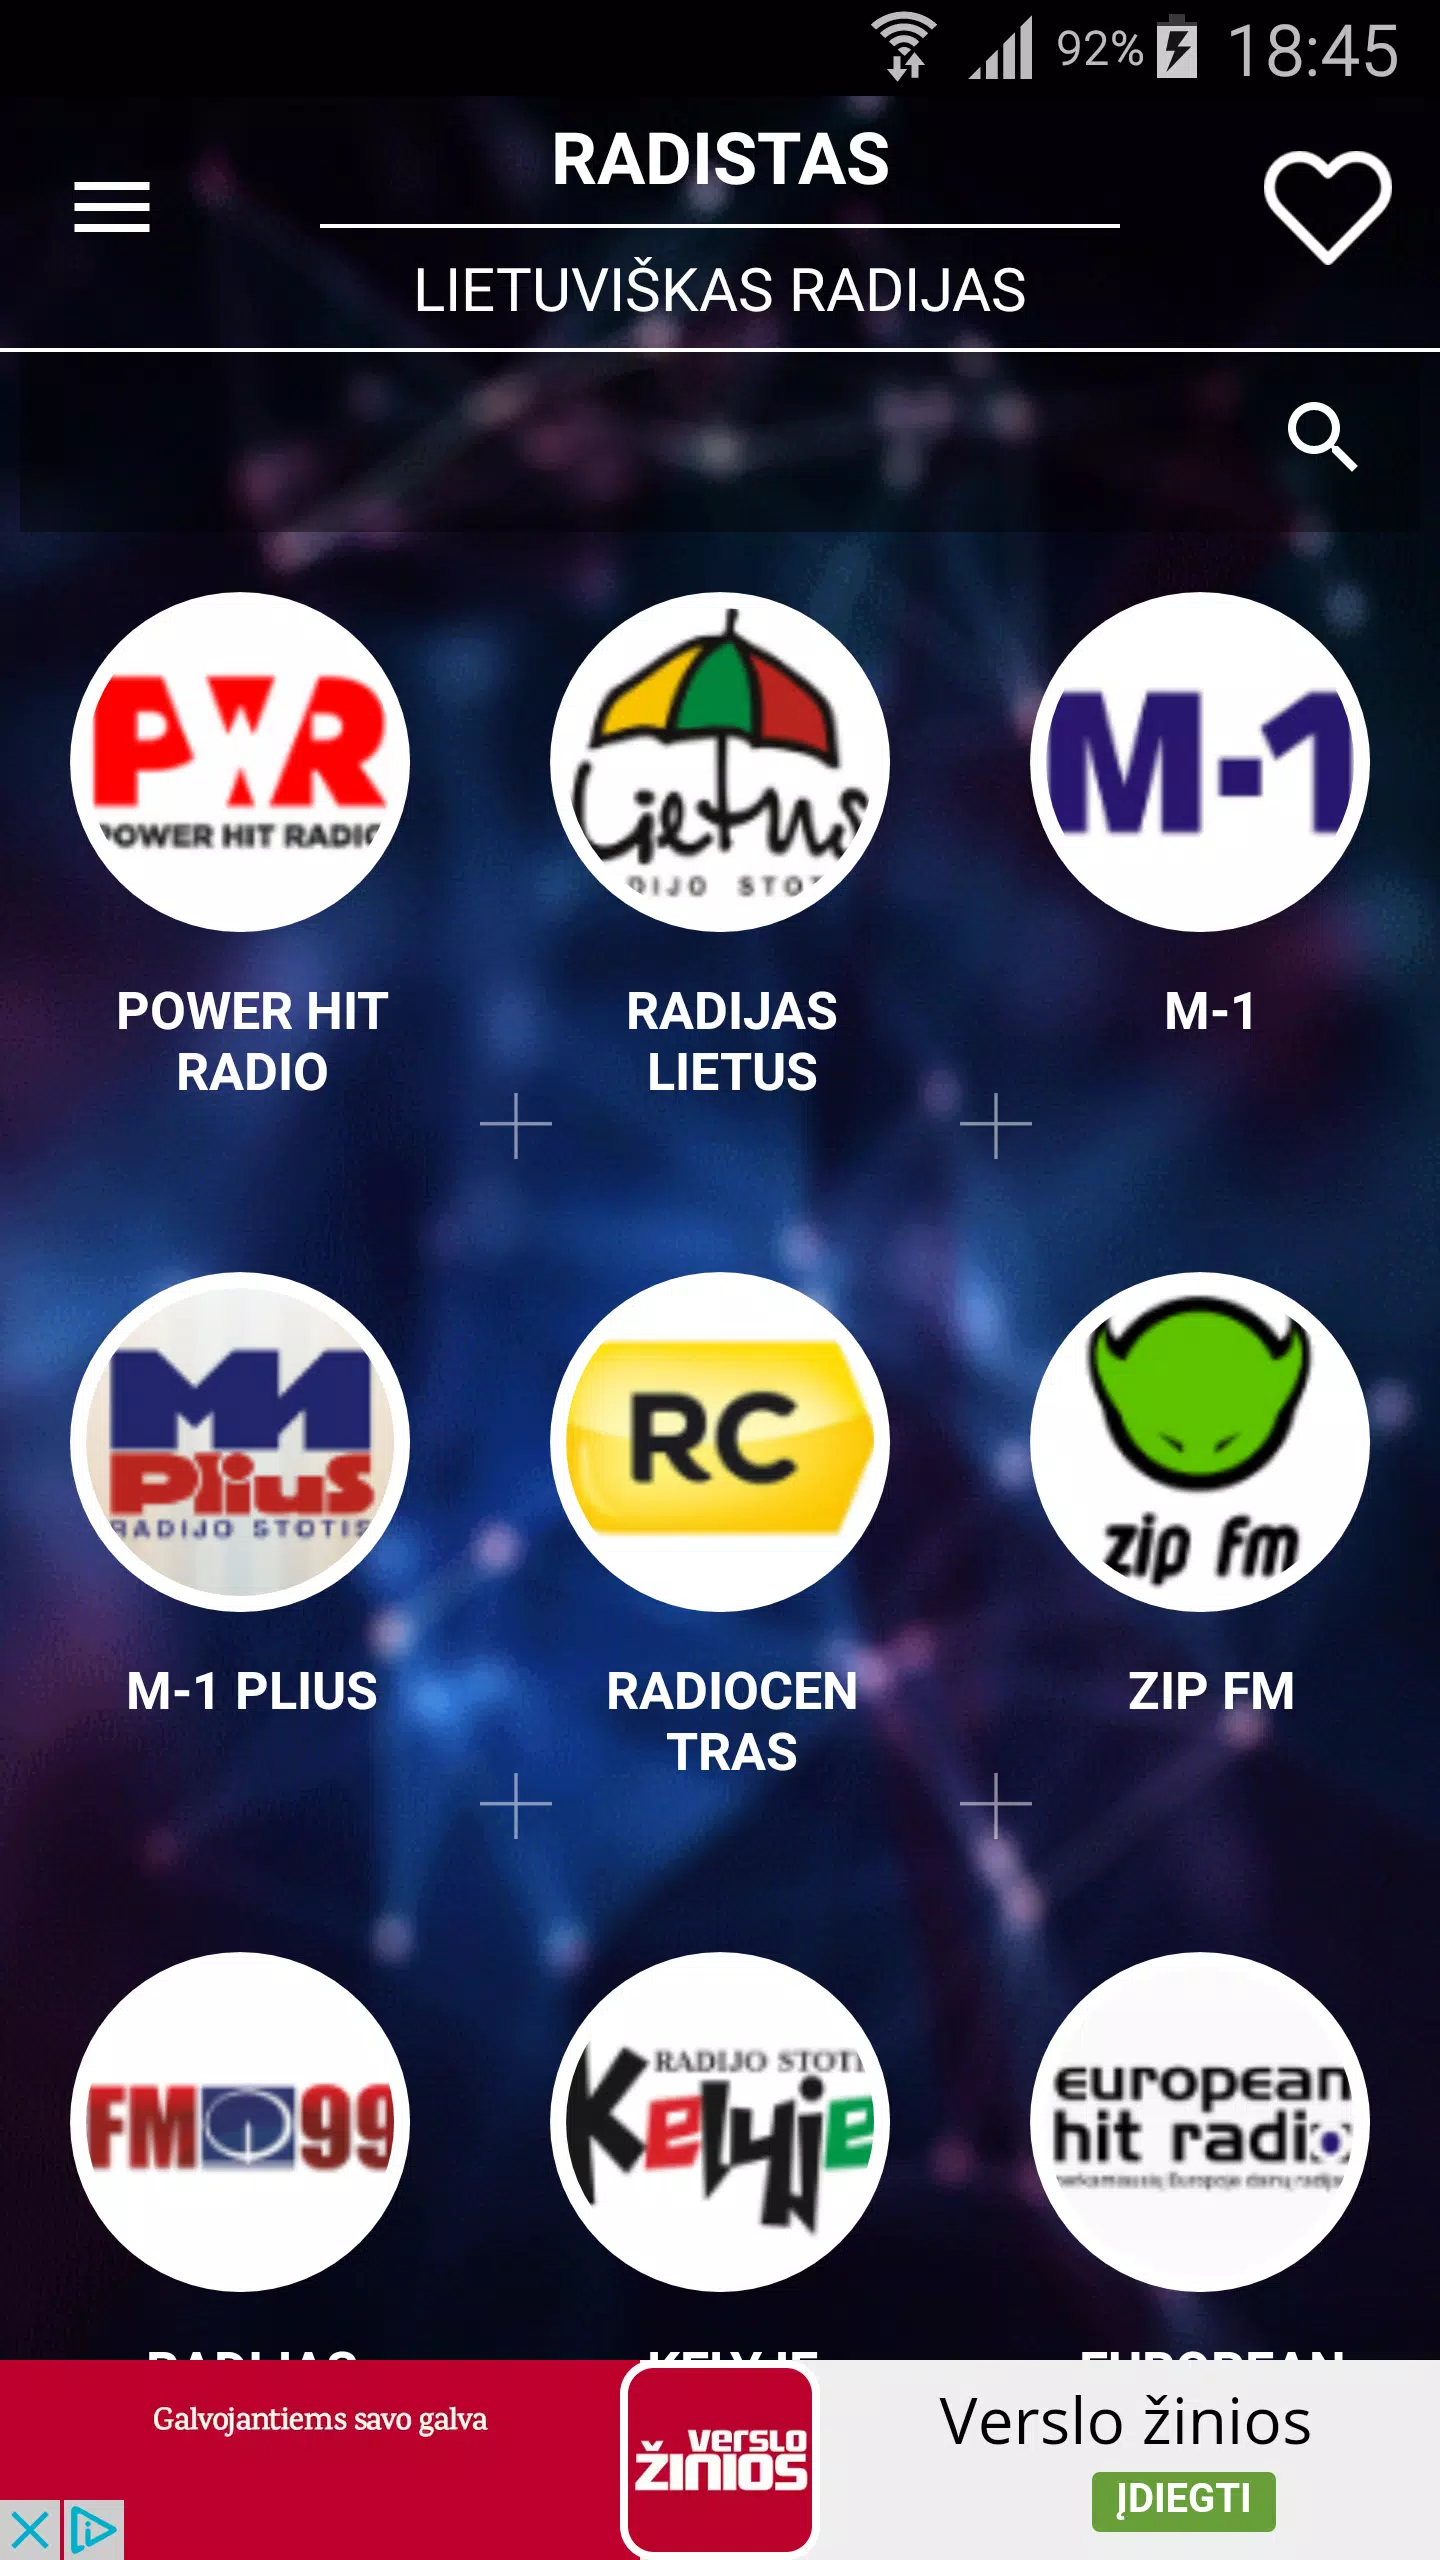 Radistas - Lietuviškas radijas APK for Android Download